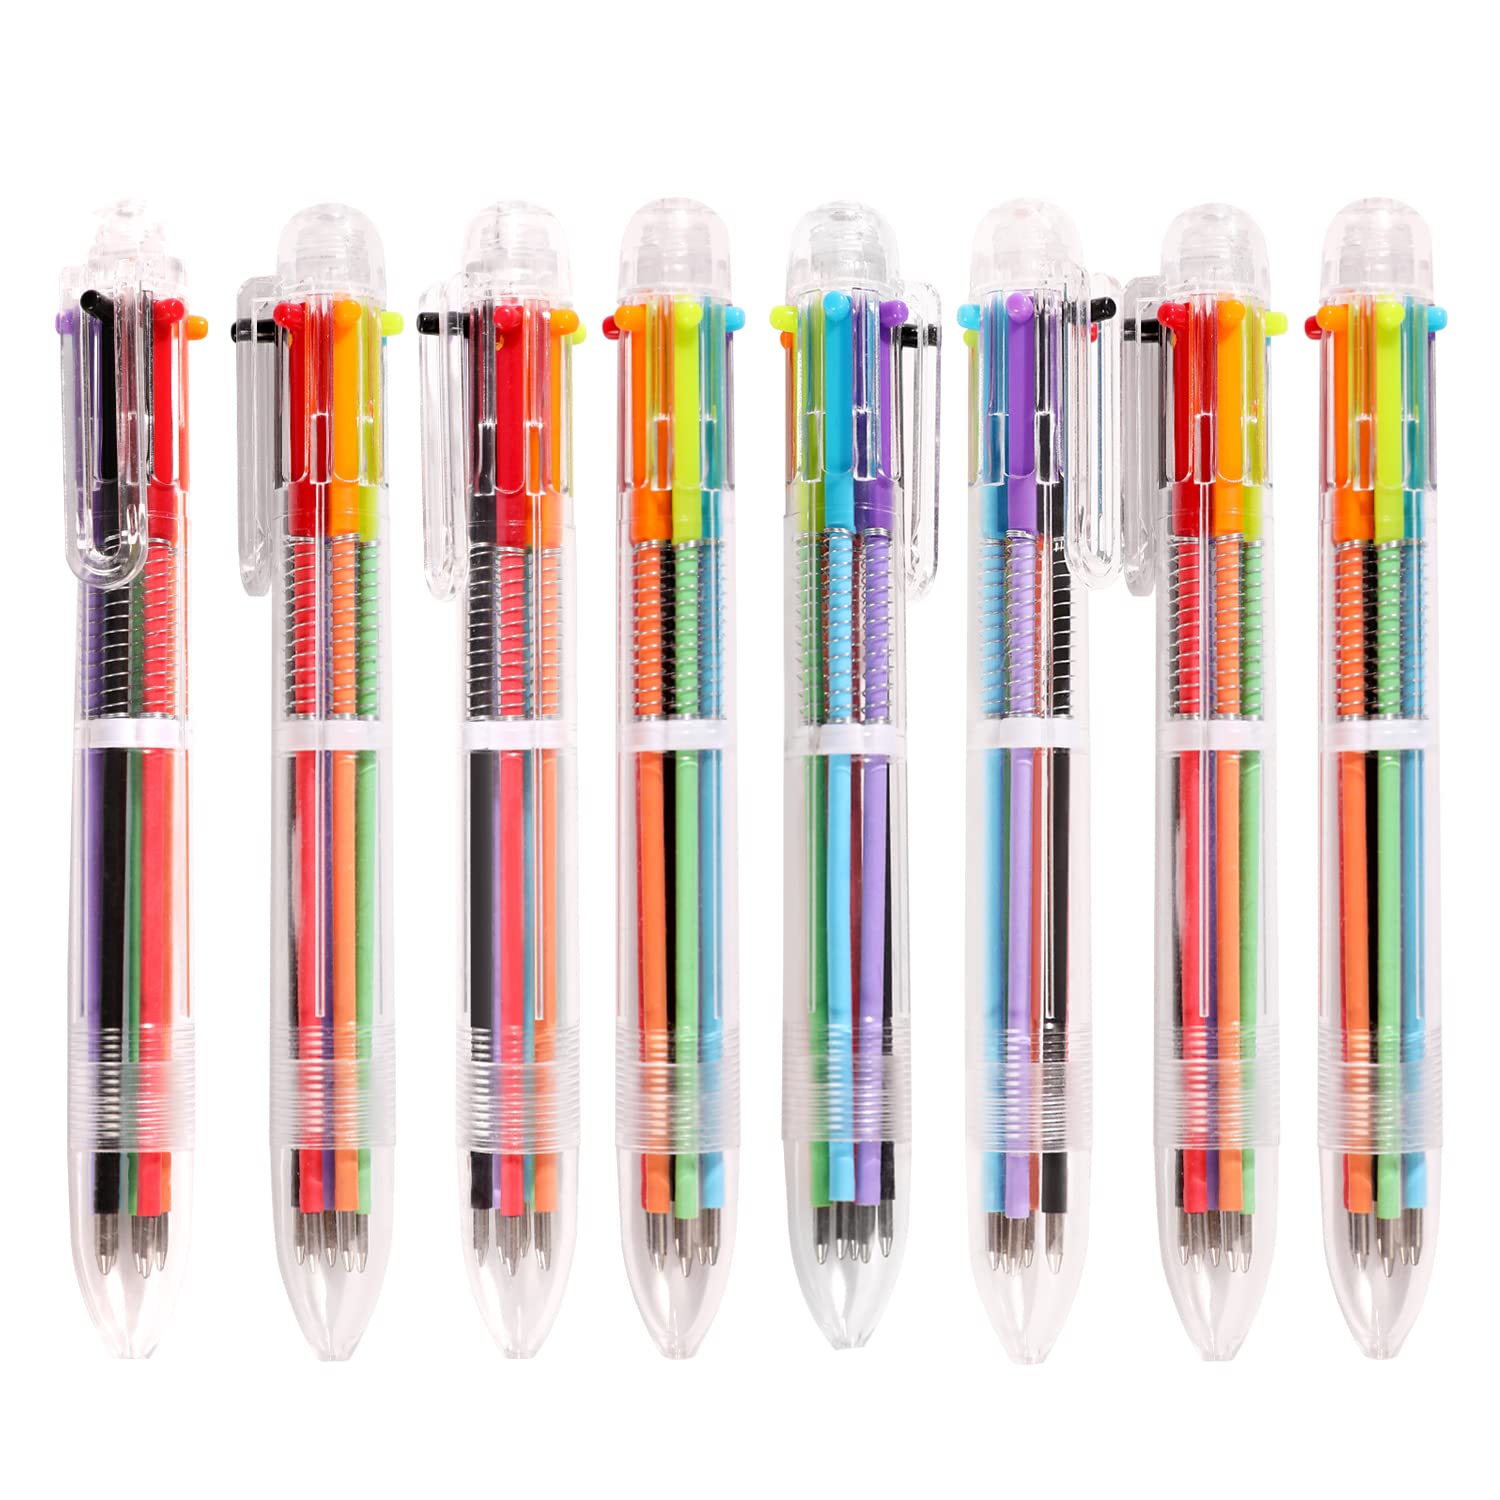 DAIKOYE 24 PCS 0.5mm 6-in-1 Multicolor Ballpoint Pen